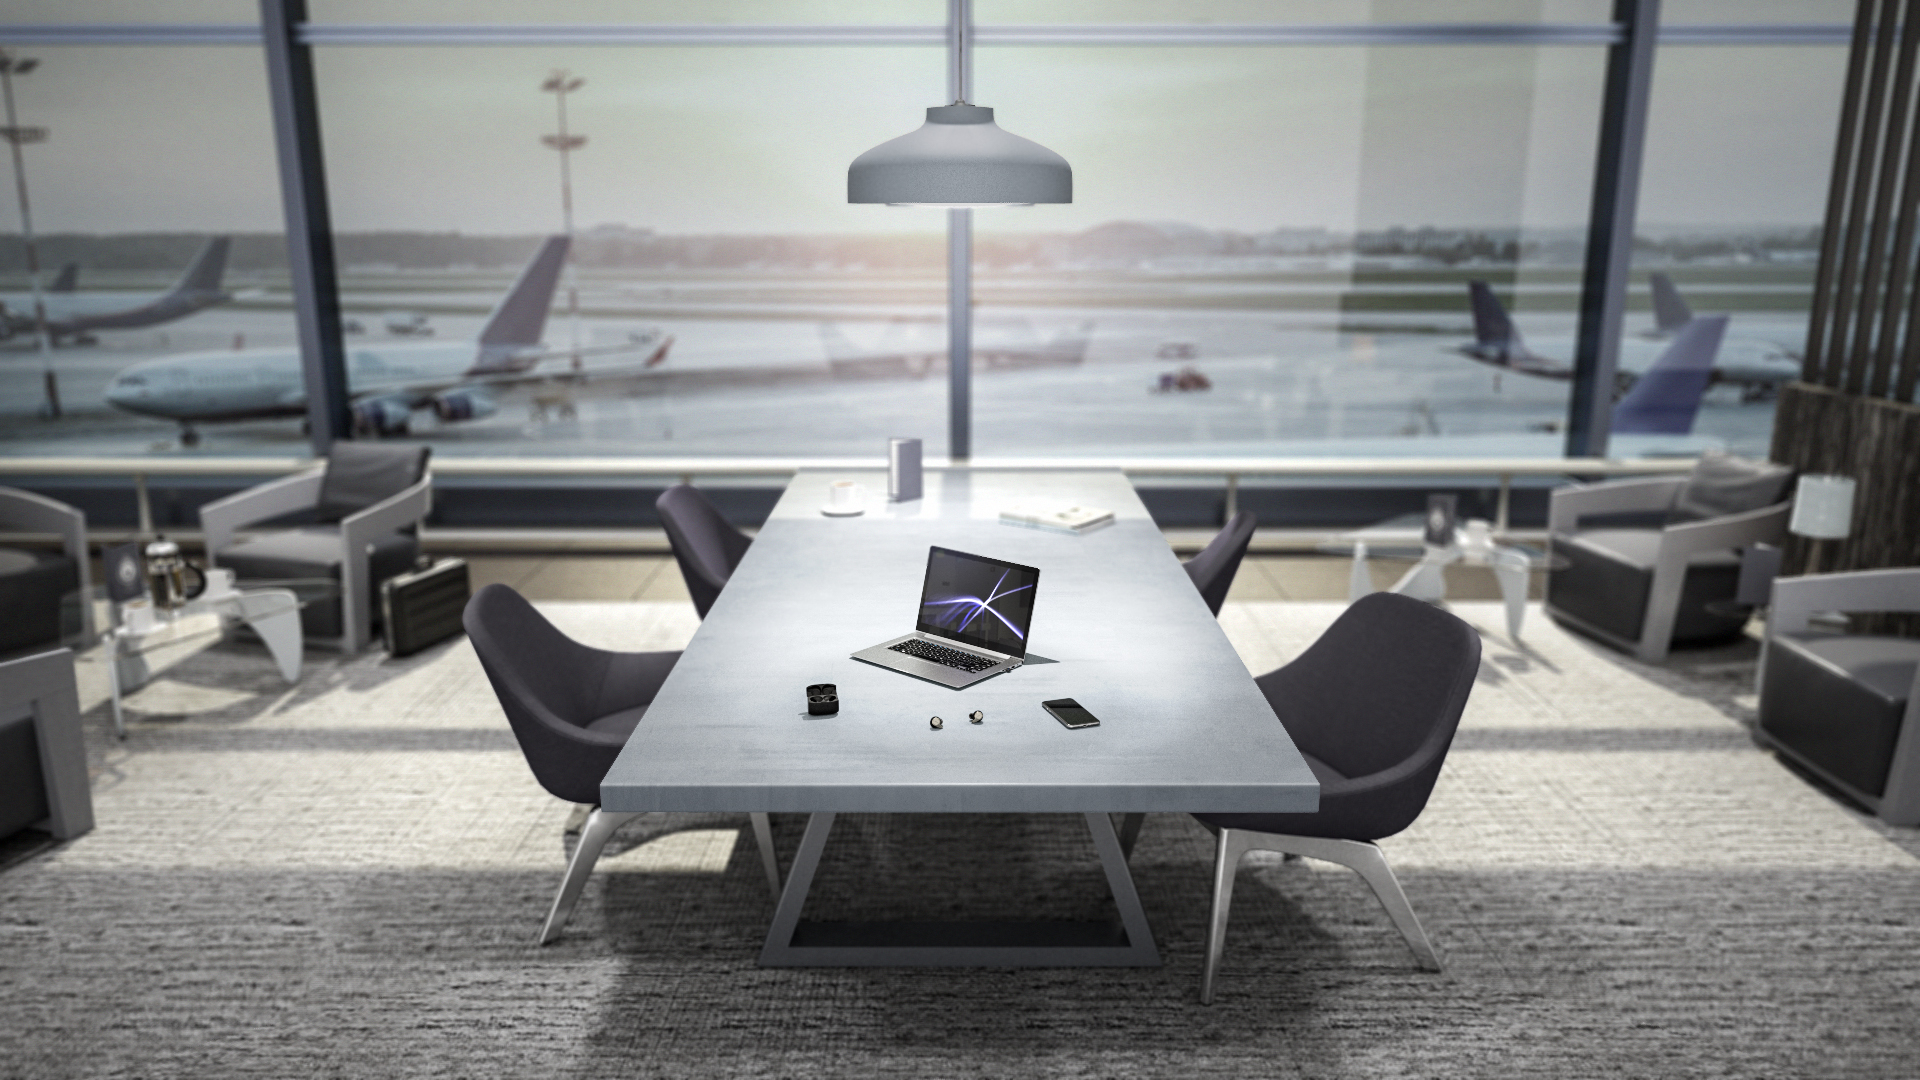 Evolve 65t_Airport Lounge_blurred background.jpg